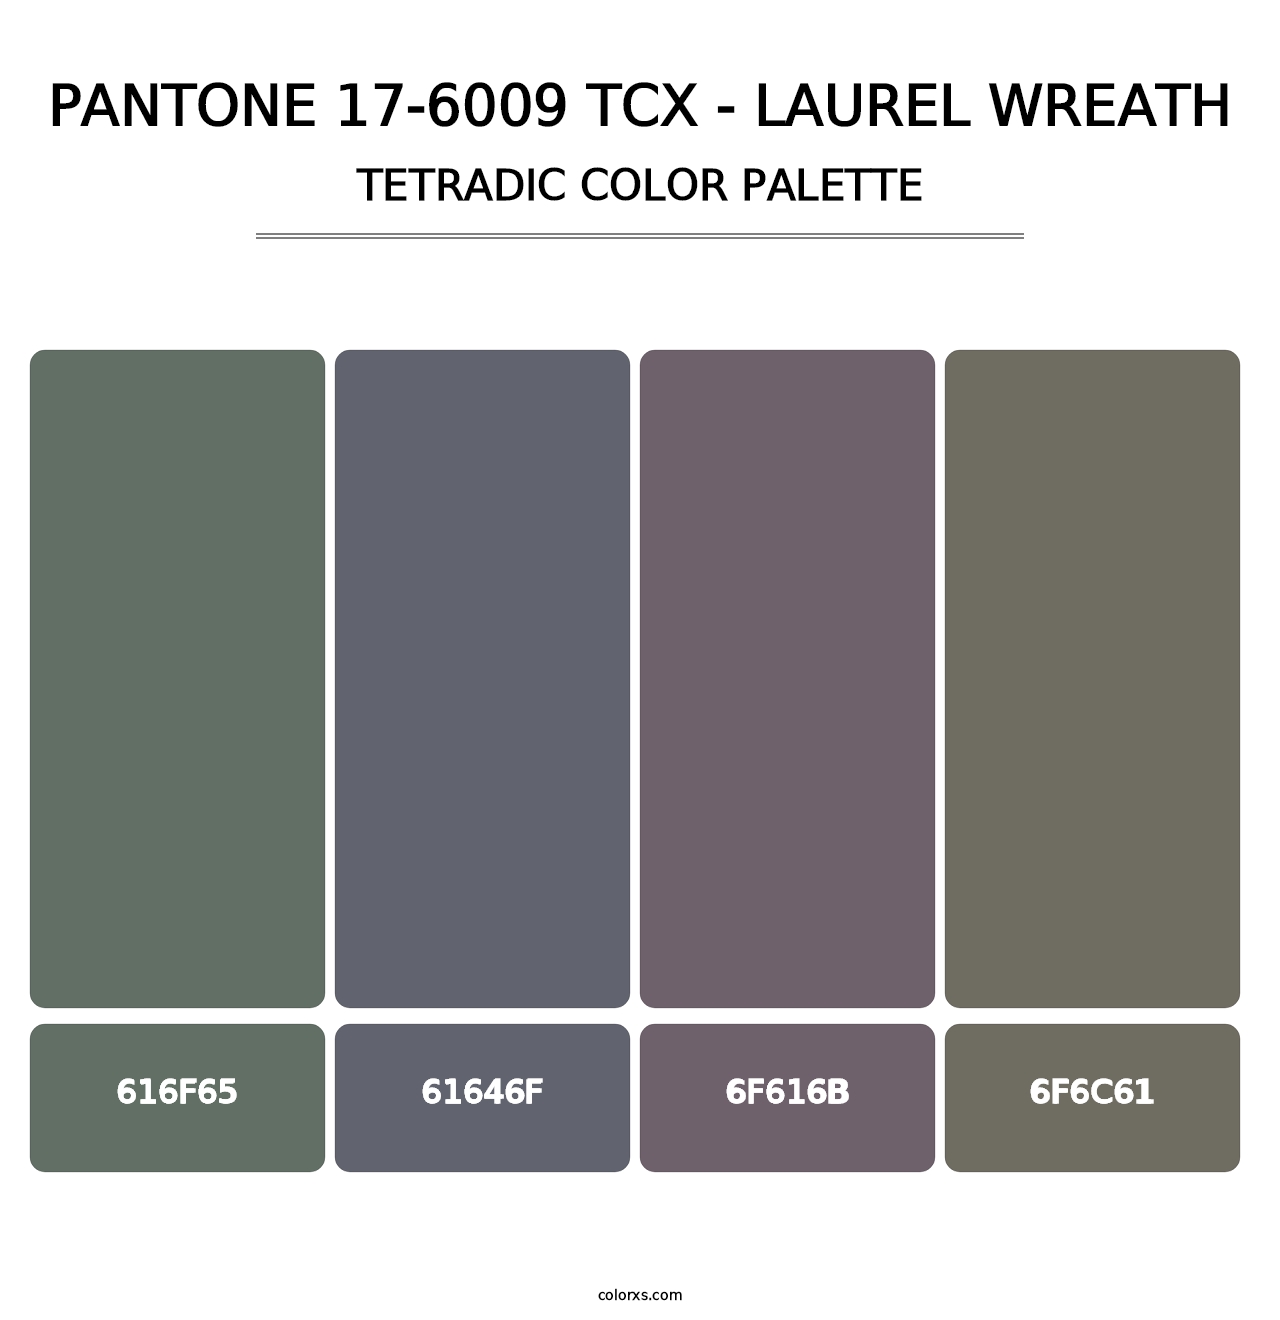 PANTONE 17-6009 TCX - Laurel Wreath - Tetradic Color Palette